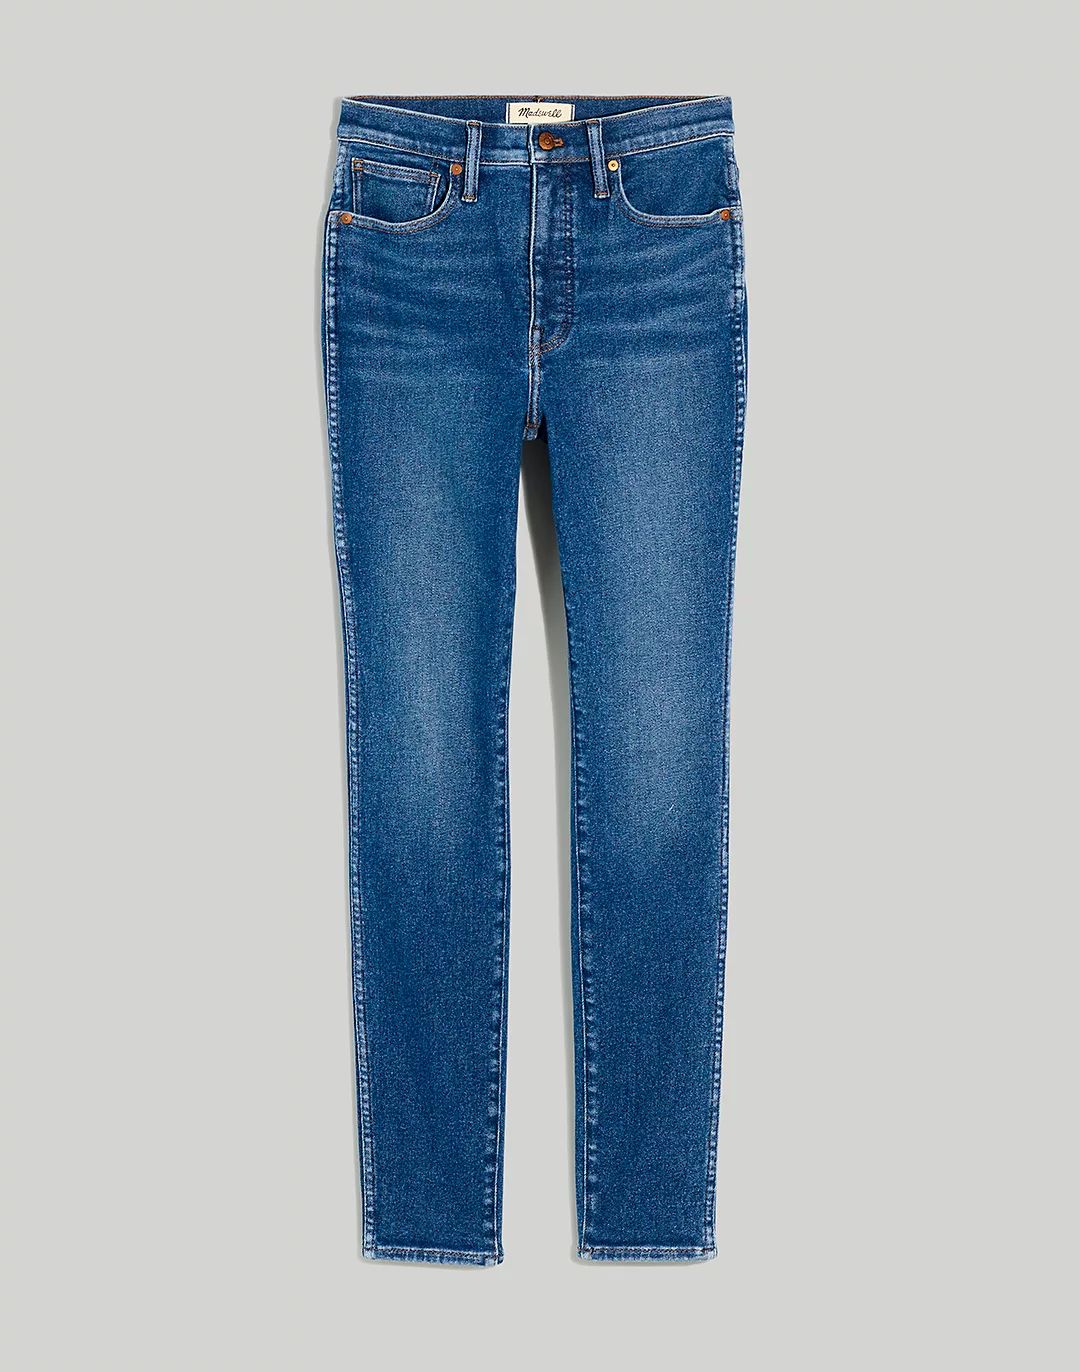 10" High-Rise Skinny Jeans in Eardley Wash | Madewell